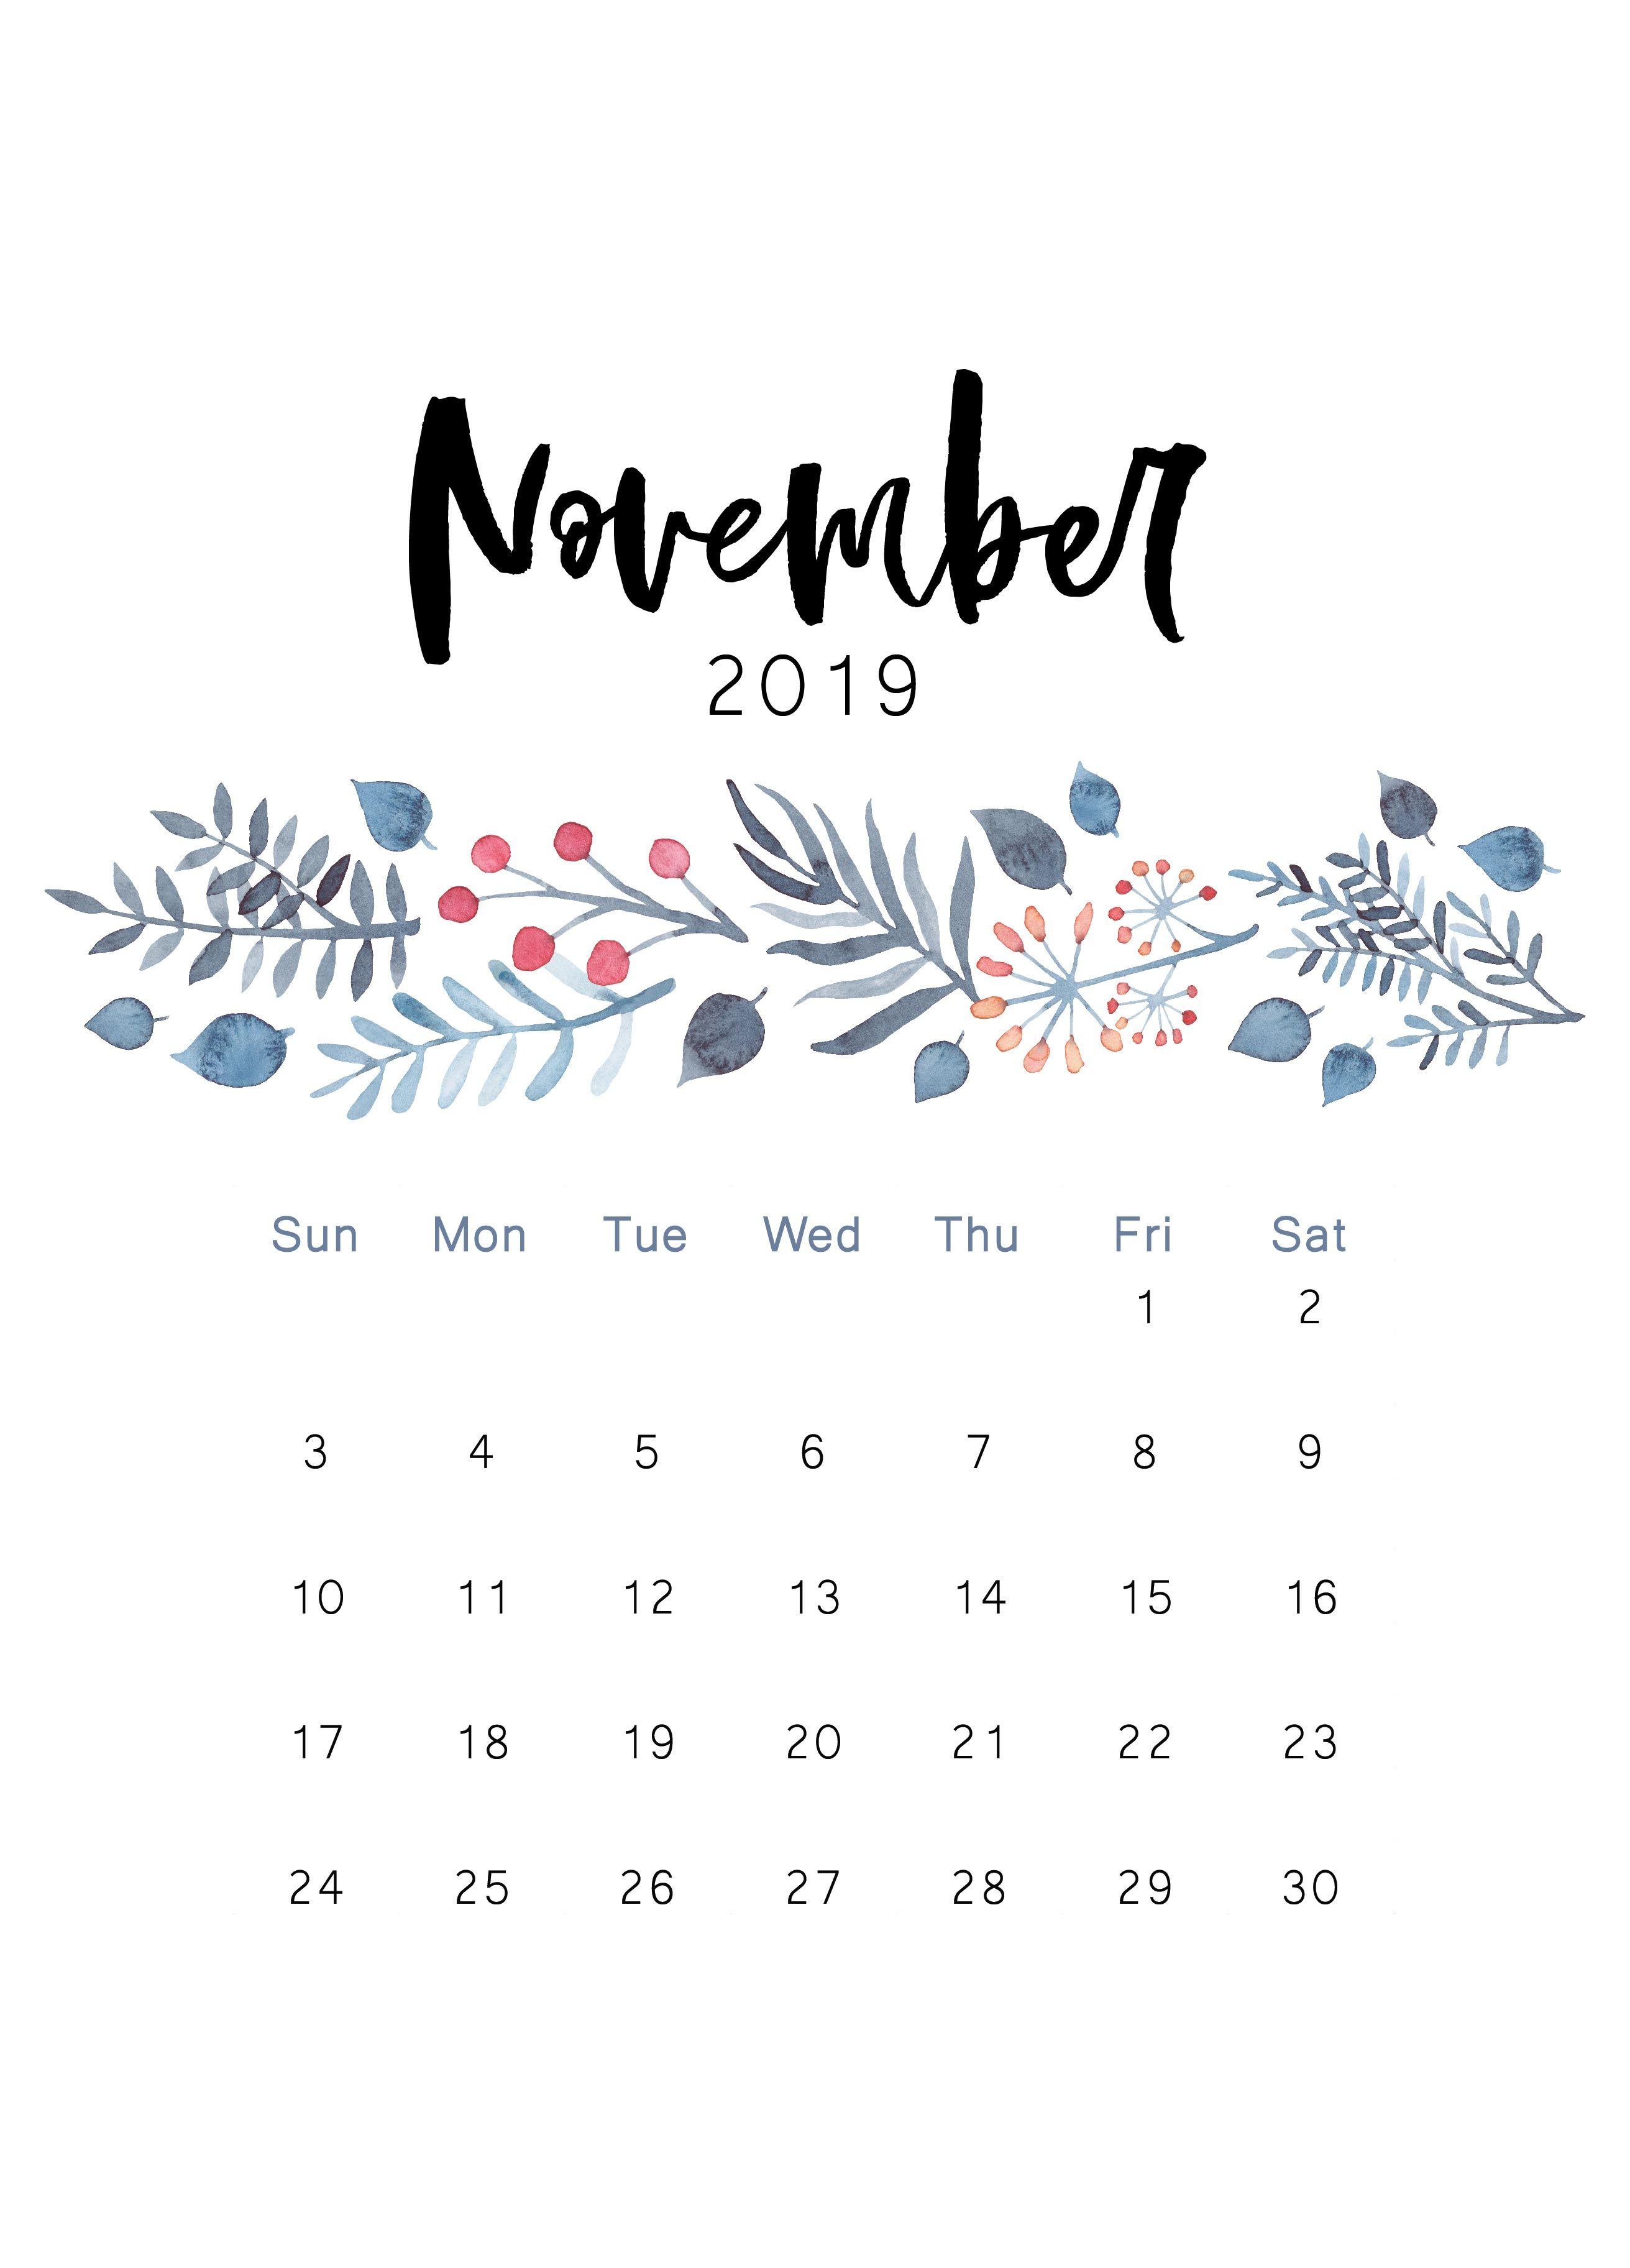 November 2019 Calendar Wallpapers Top Free November 2019 Calendar